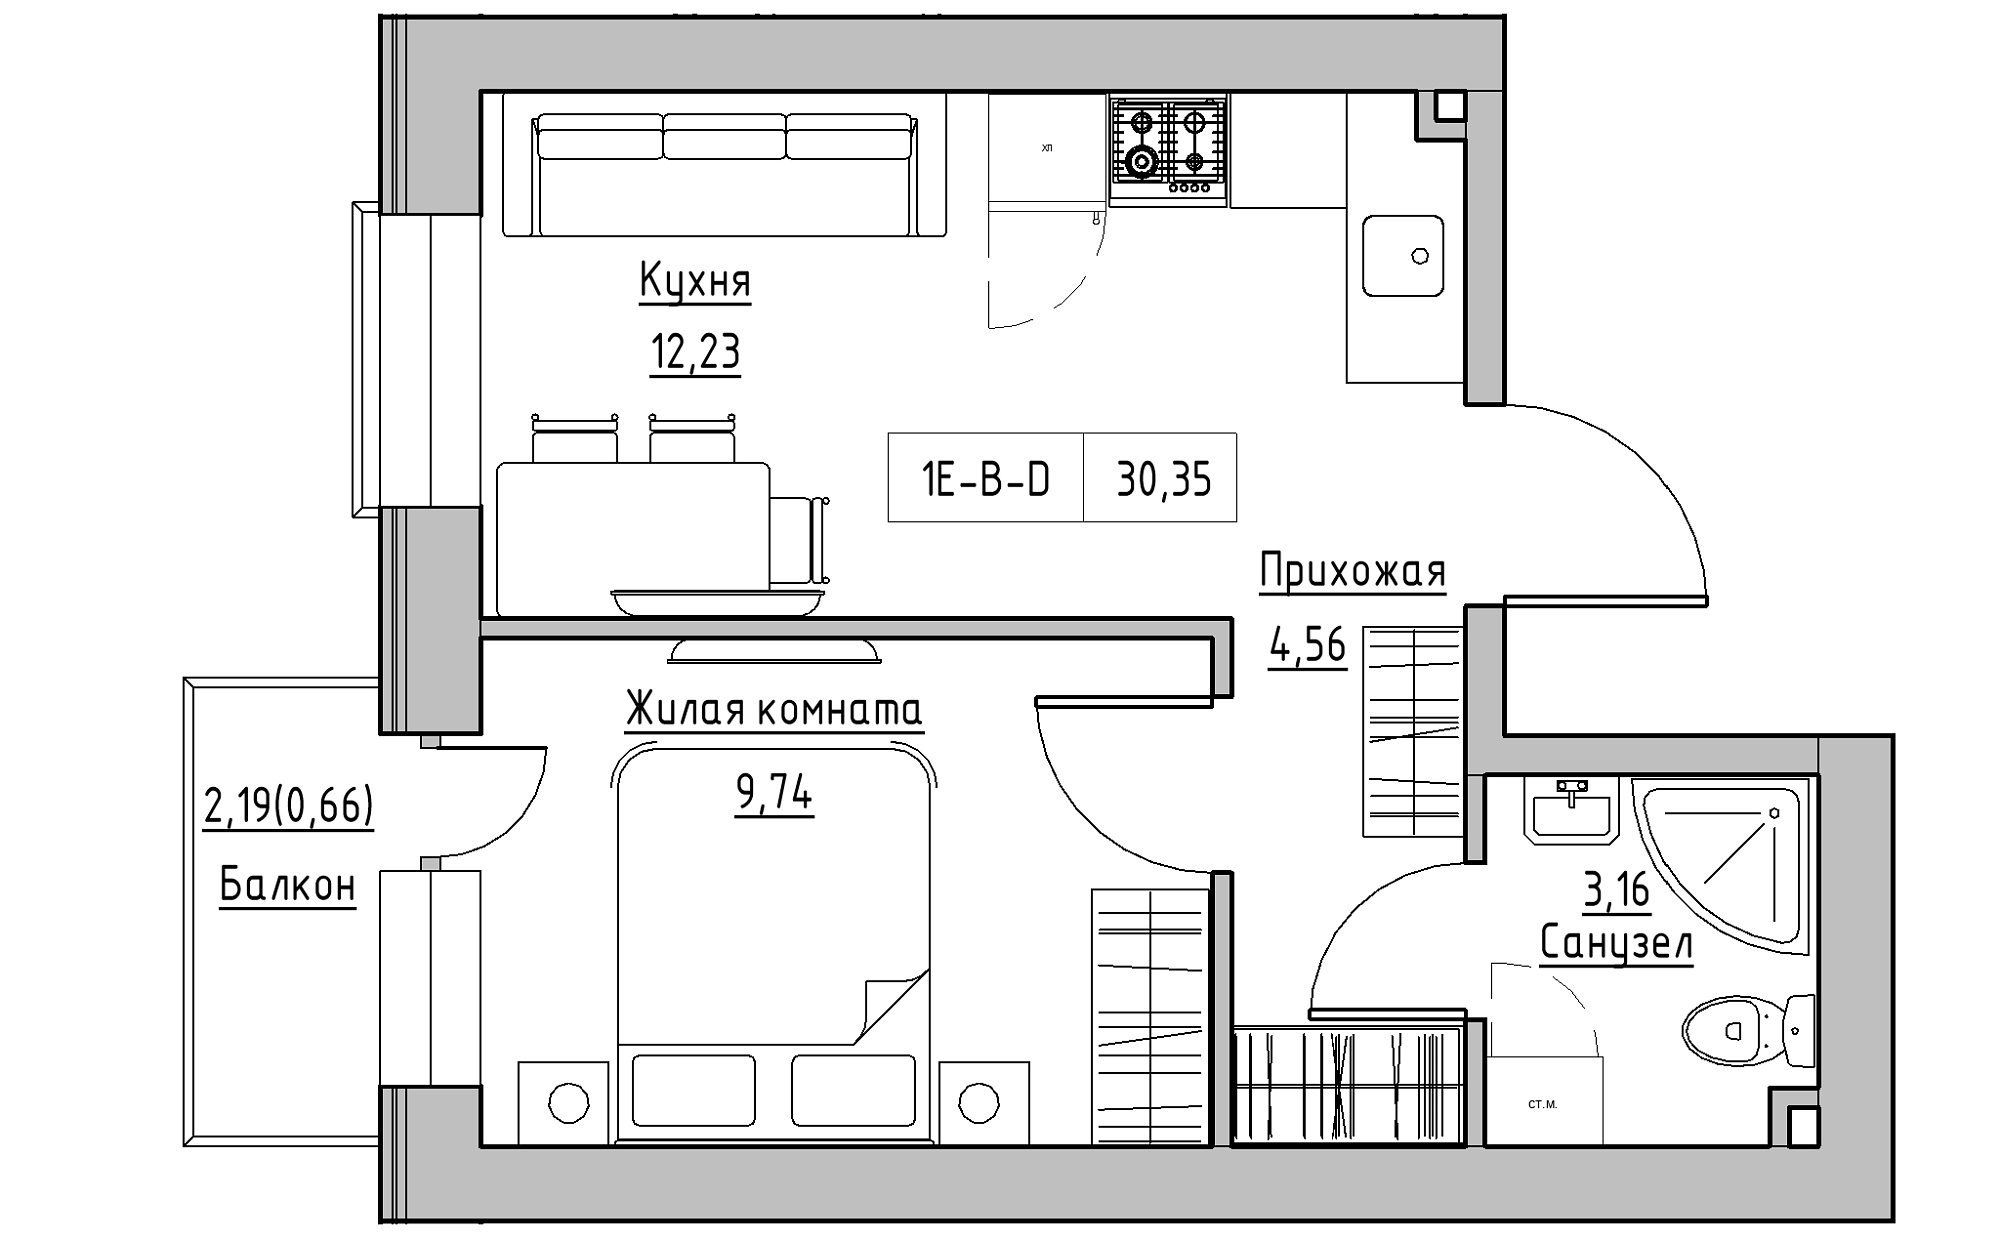 Planning 1-rm flats area 30.35m2, KS-022-02/0012.